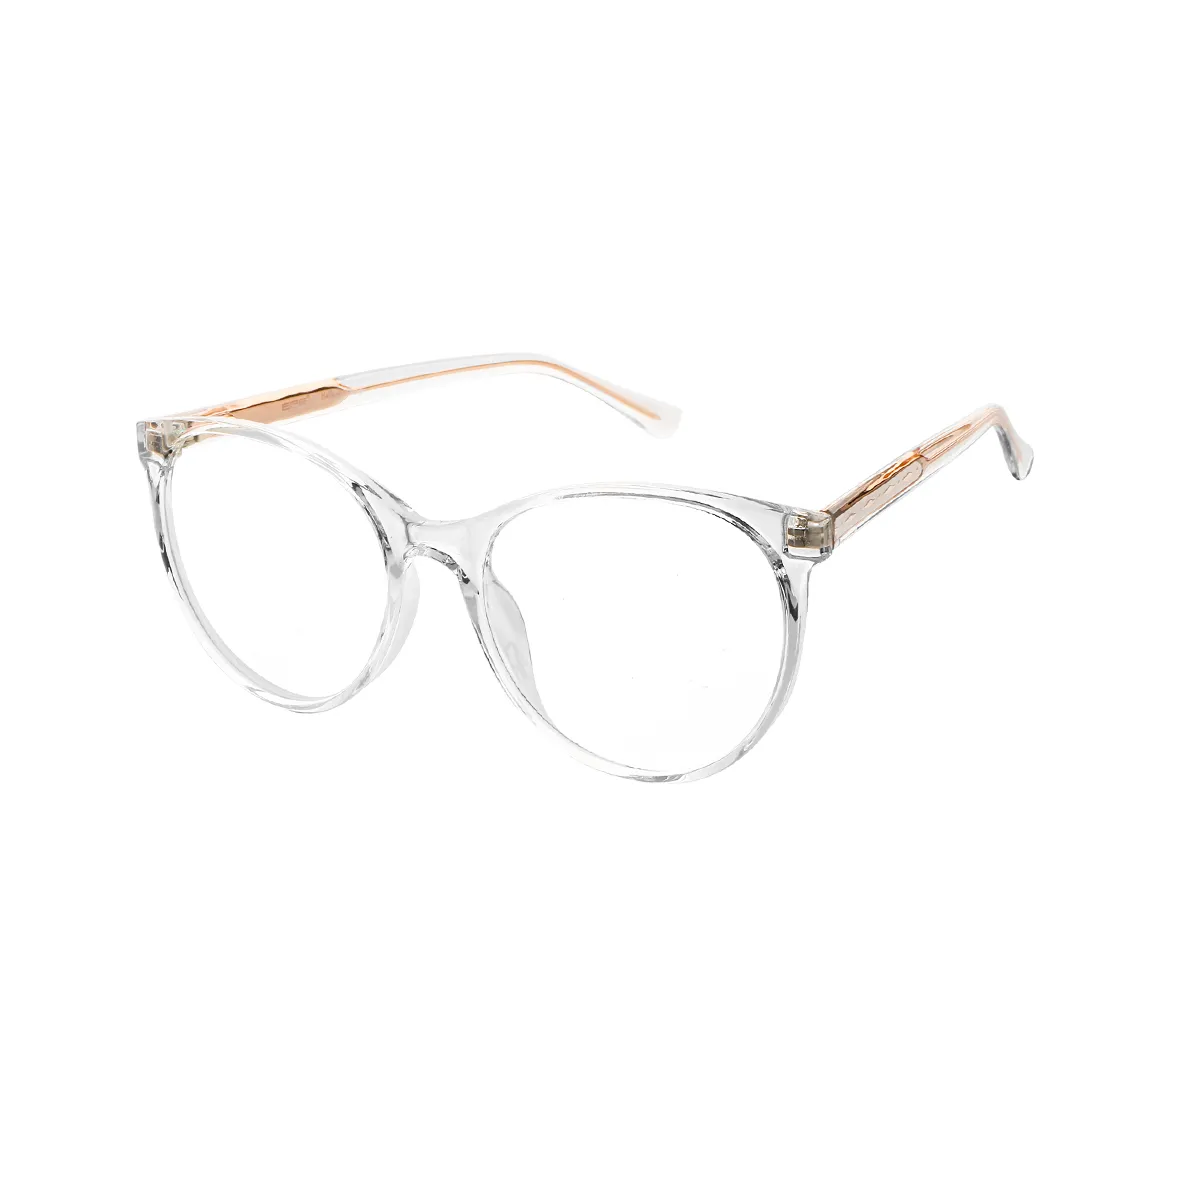 Goldie - Round Translucent Glasses for Women - EFE